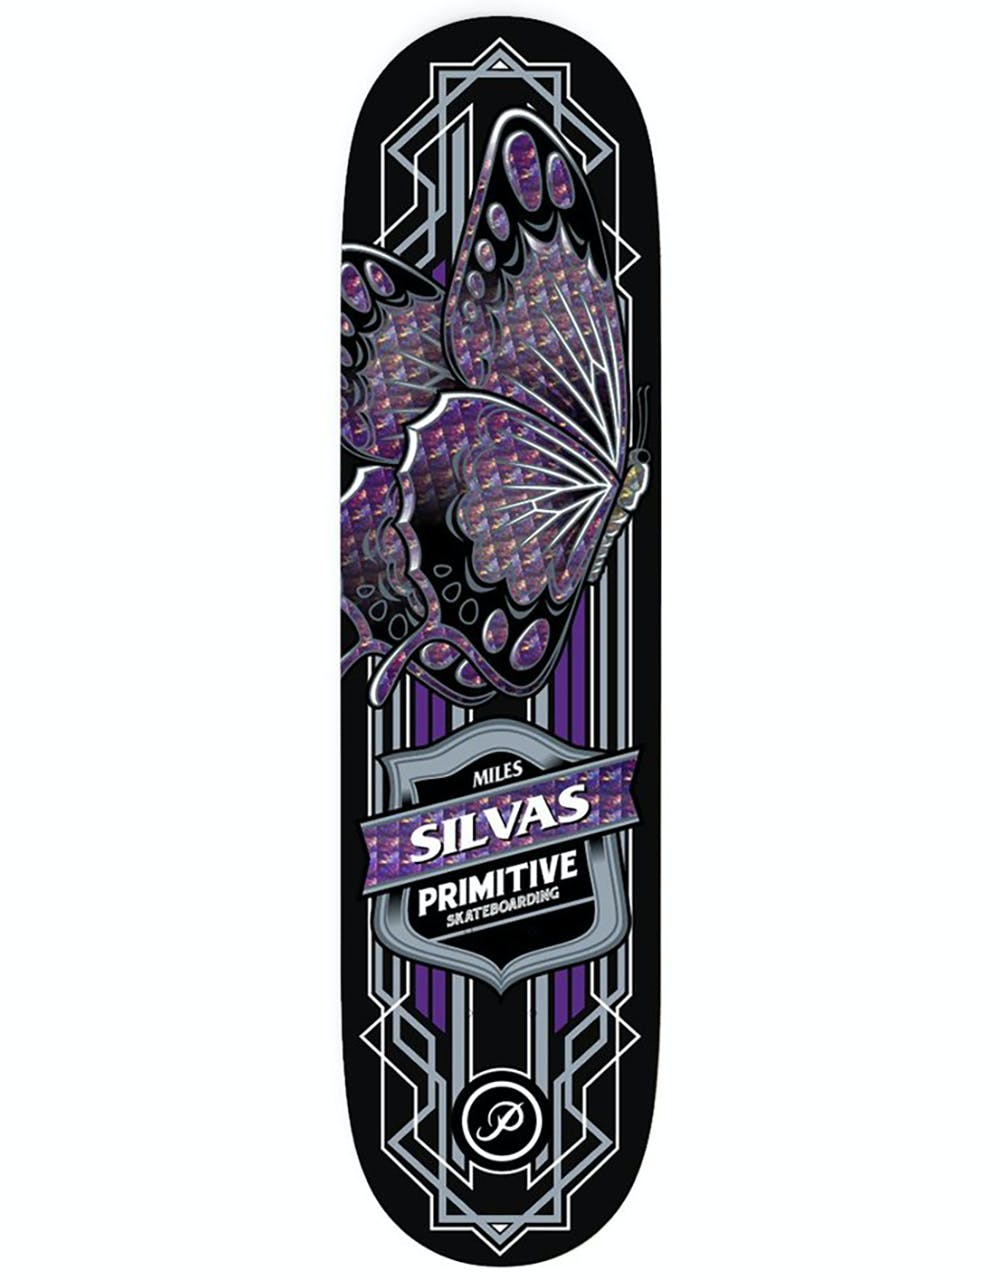 Primitive Silvas Butterfly Skateboard Deck - 8.25"